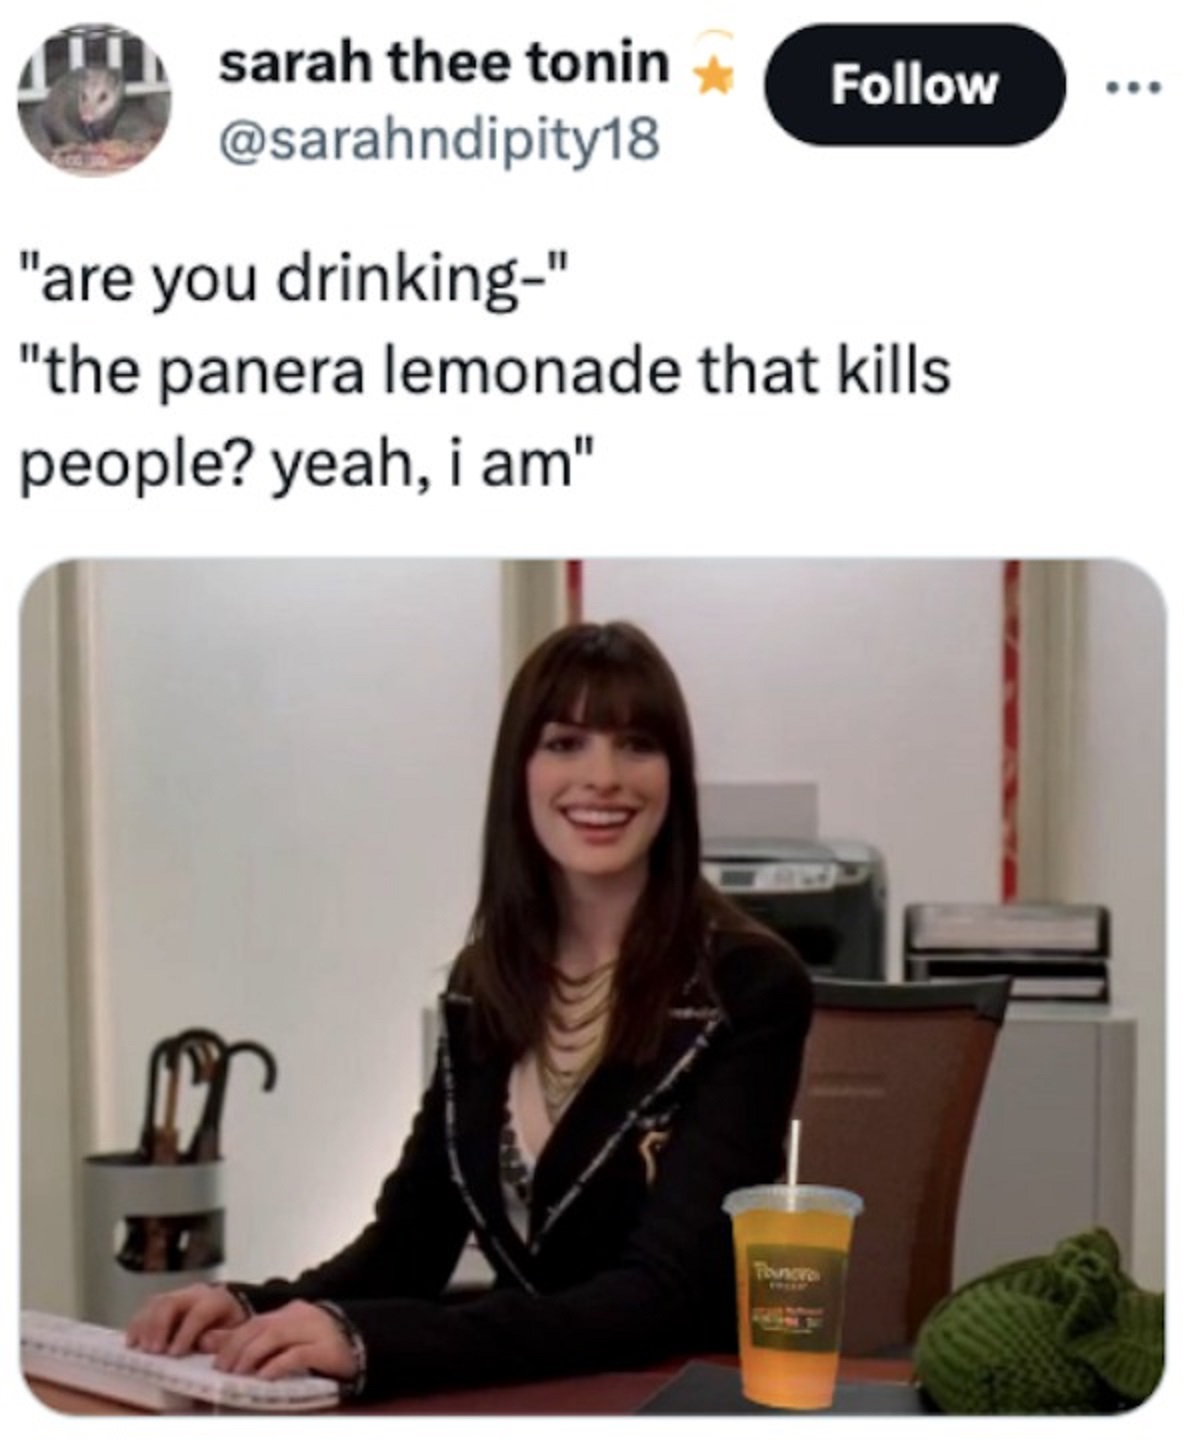 presentation - sarah thee tonin "are you drinking" "the panera lemonade that kills people? yeah, i am" Ponoro